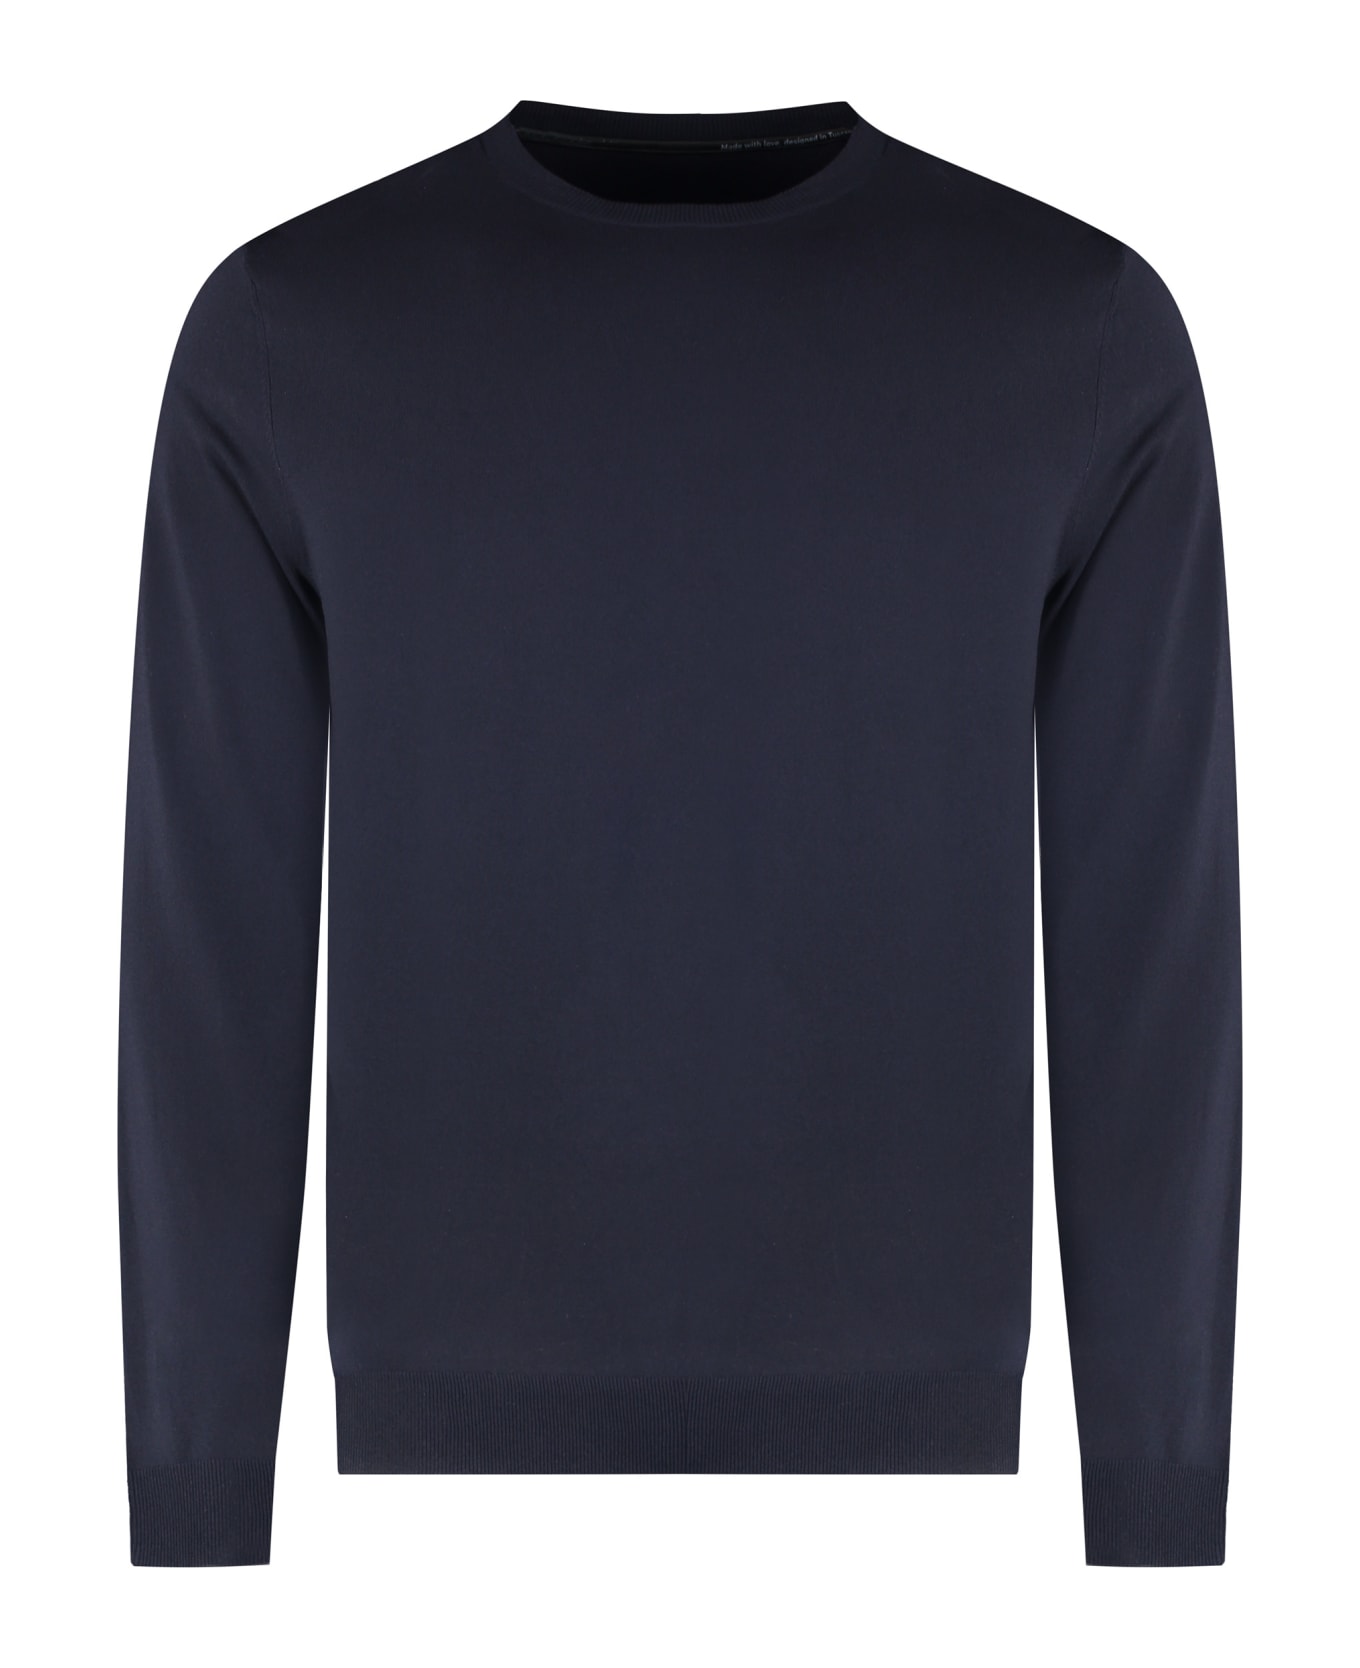 RRD - Roberto Ricci Design Booster Round Knit Sweatshirt - Blue/Black